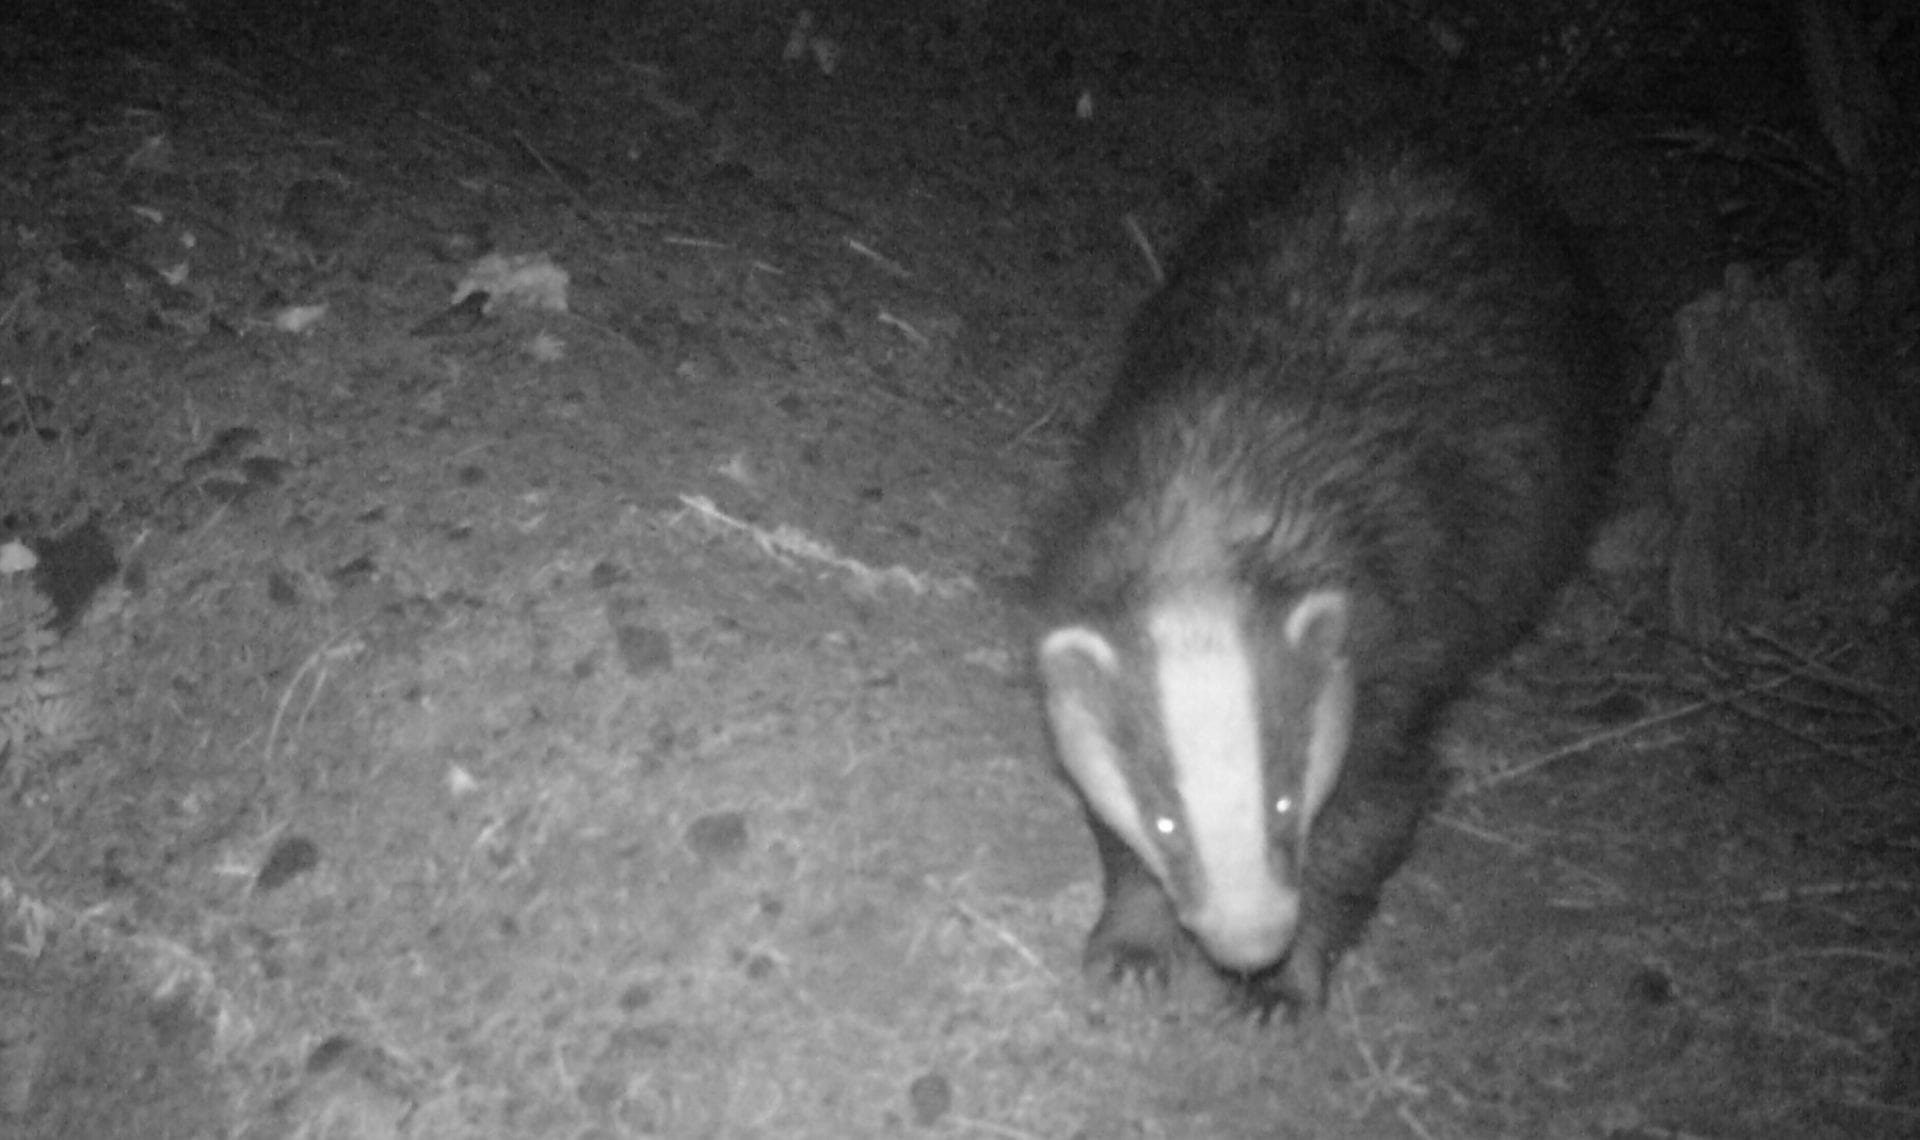 Badger in Yorkshire on wildlife camera trap